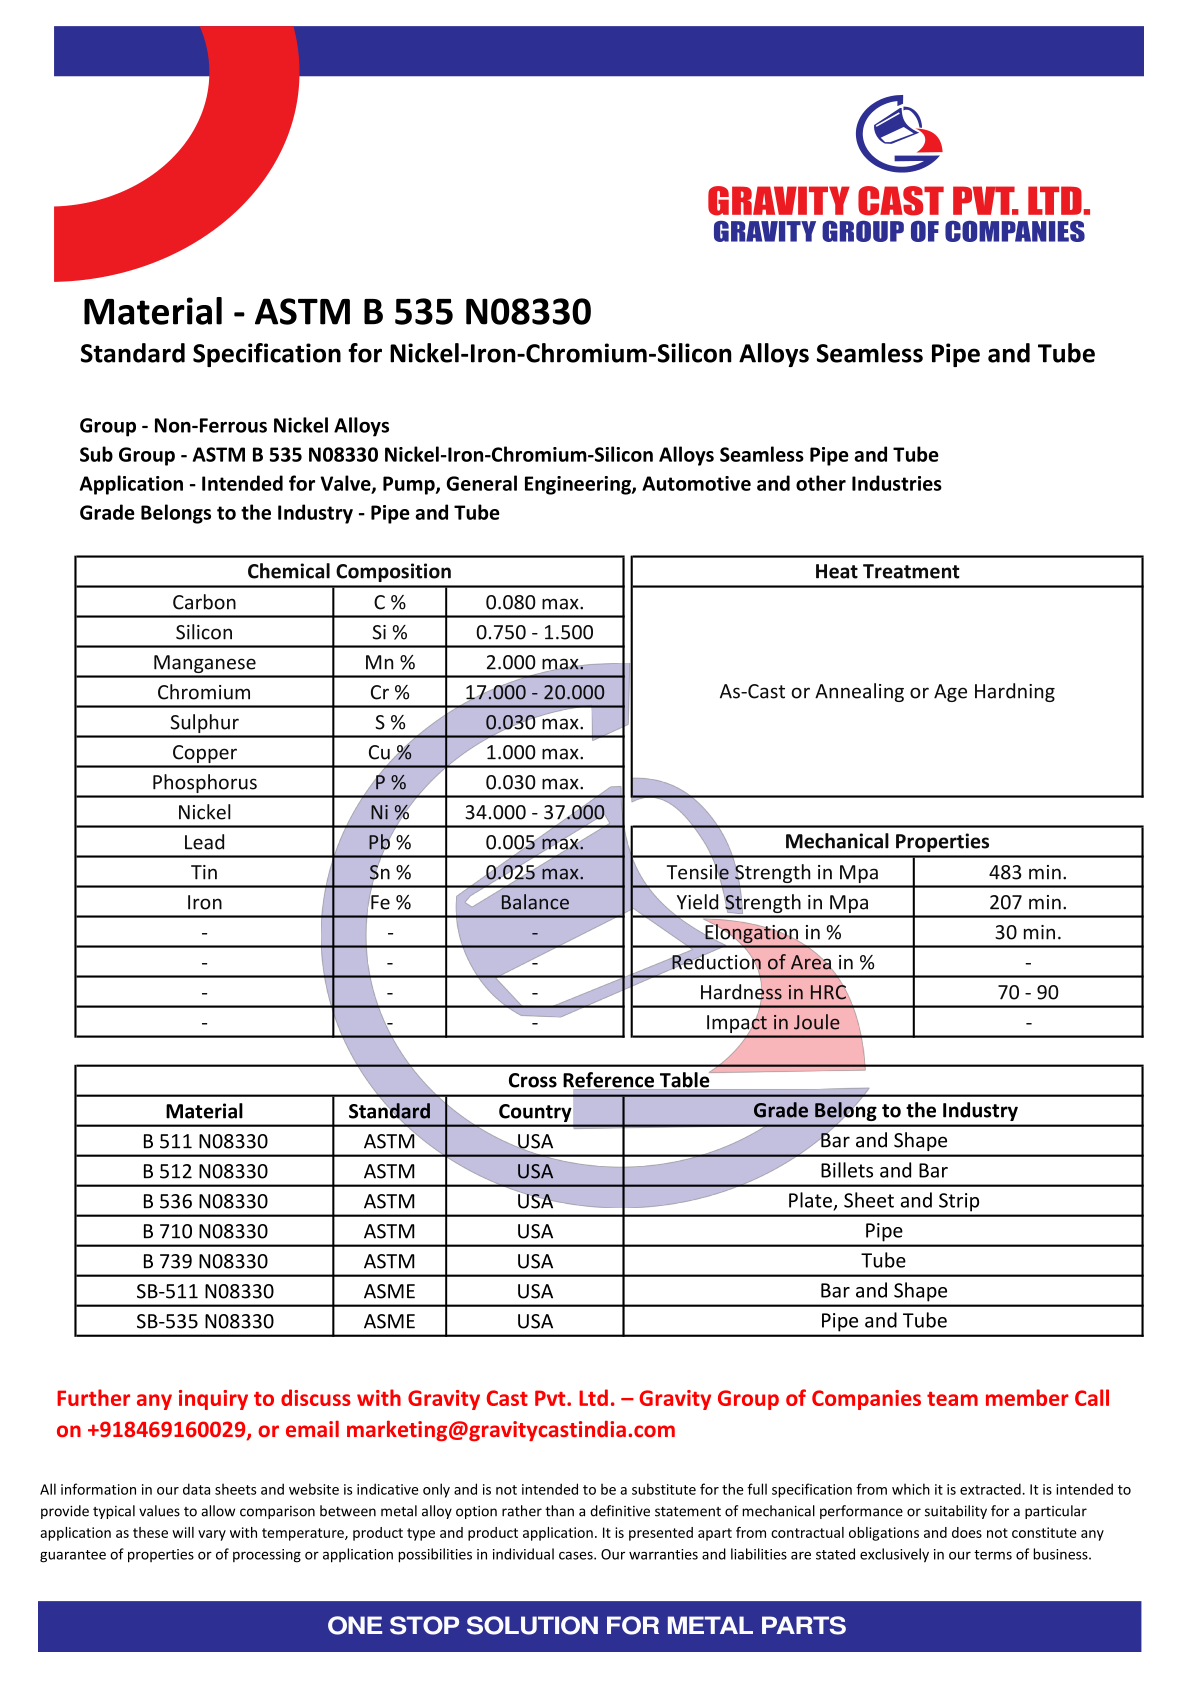 ASTM B 535 N08330.pdf